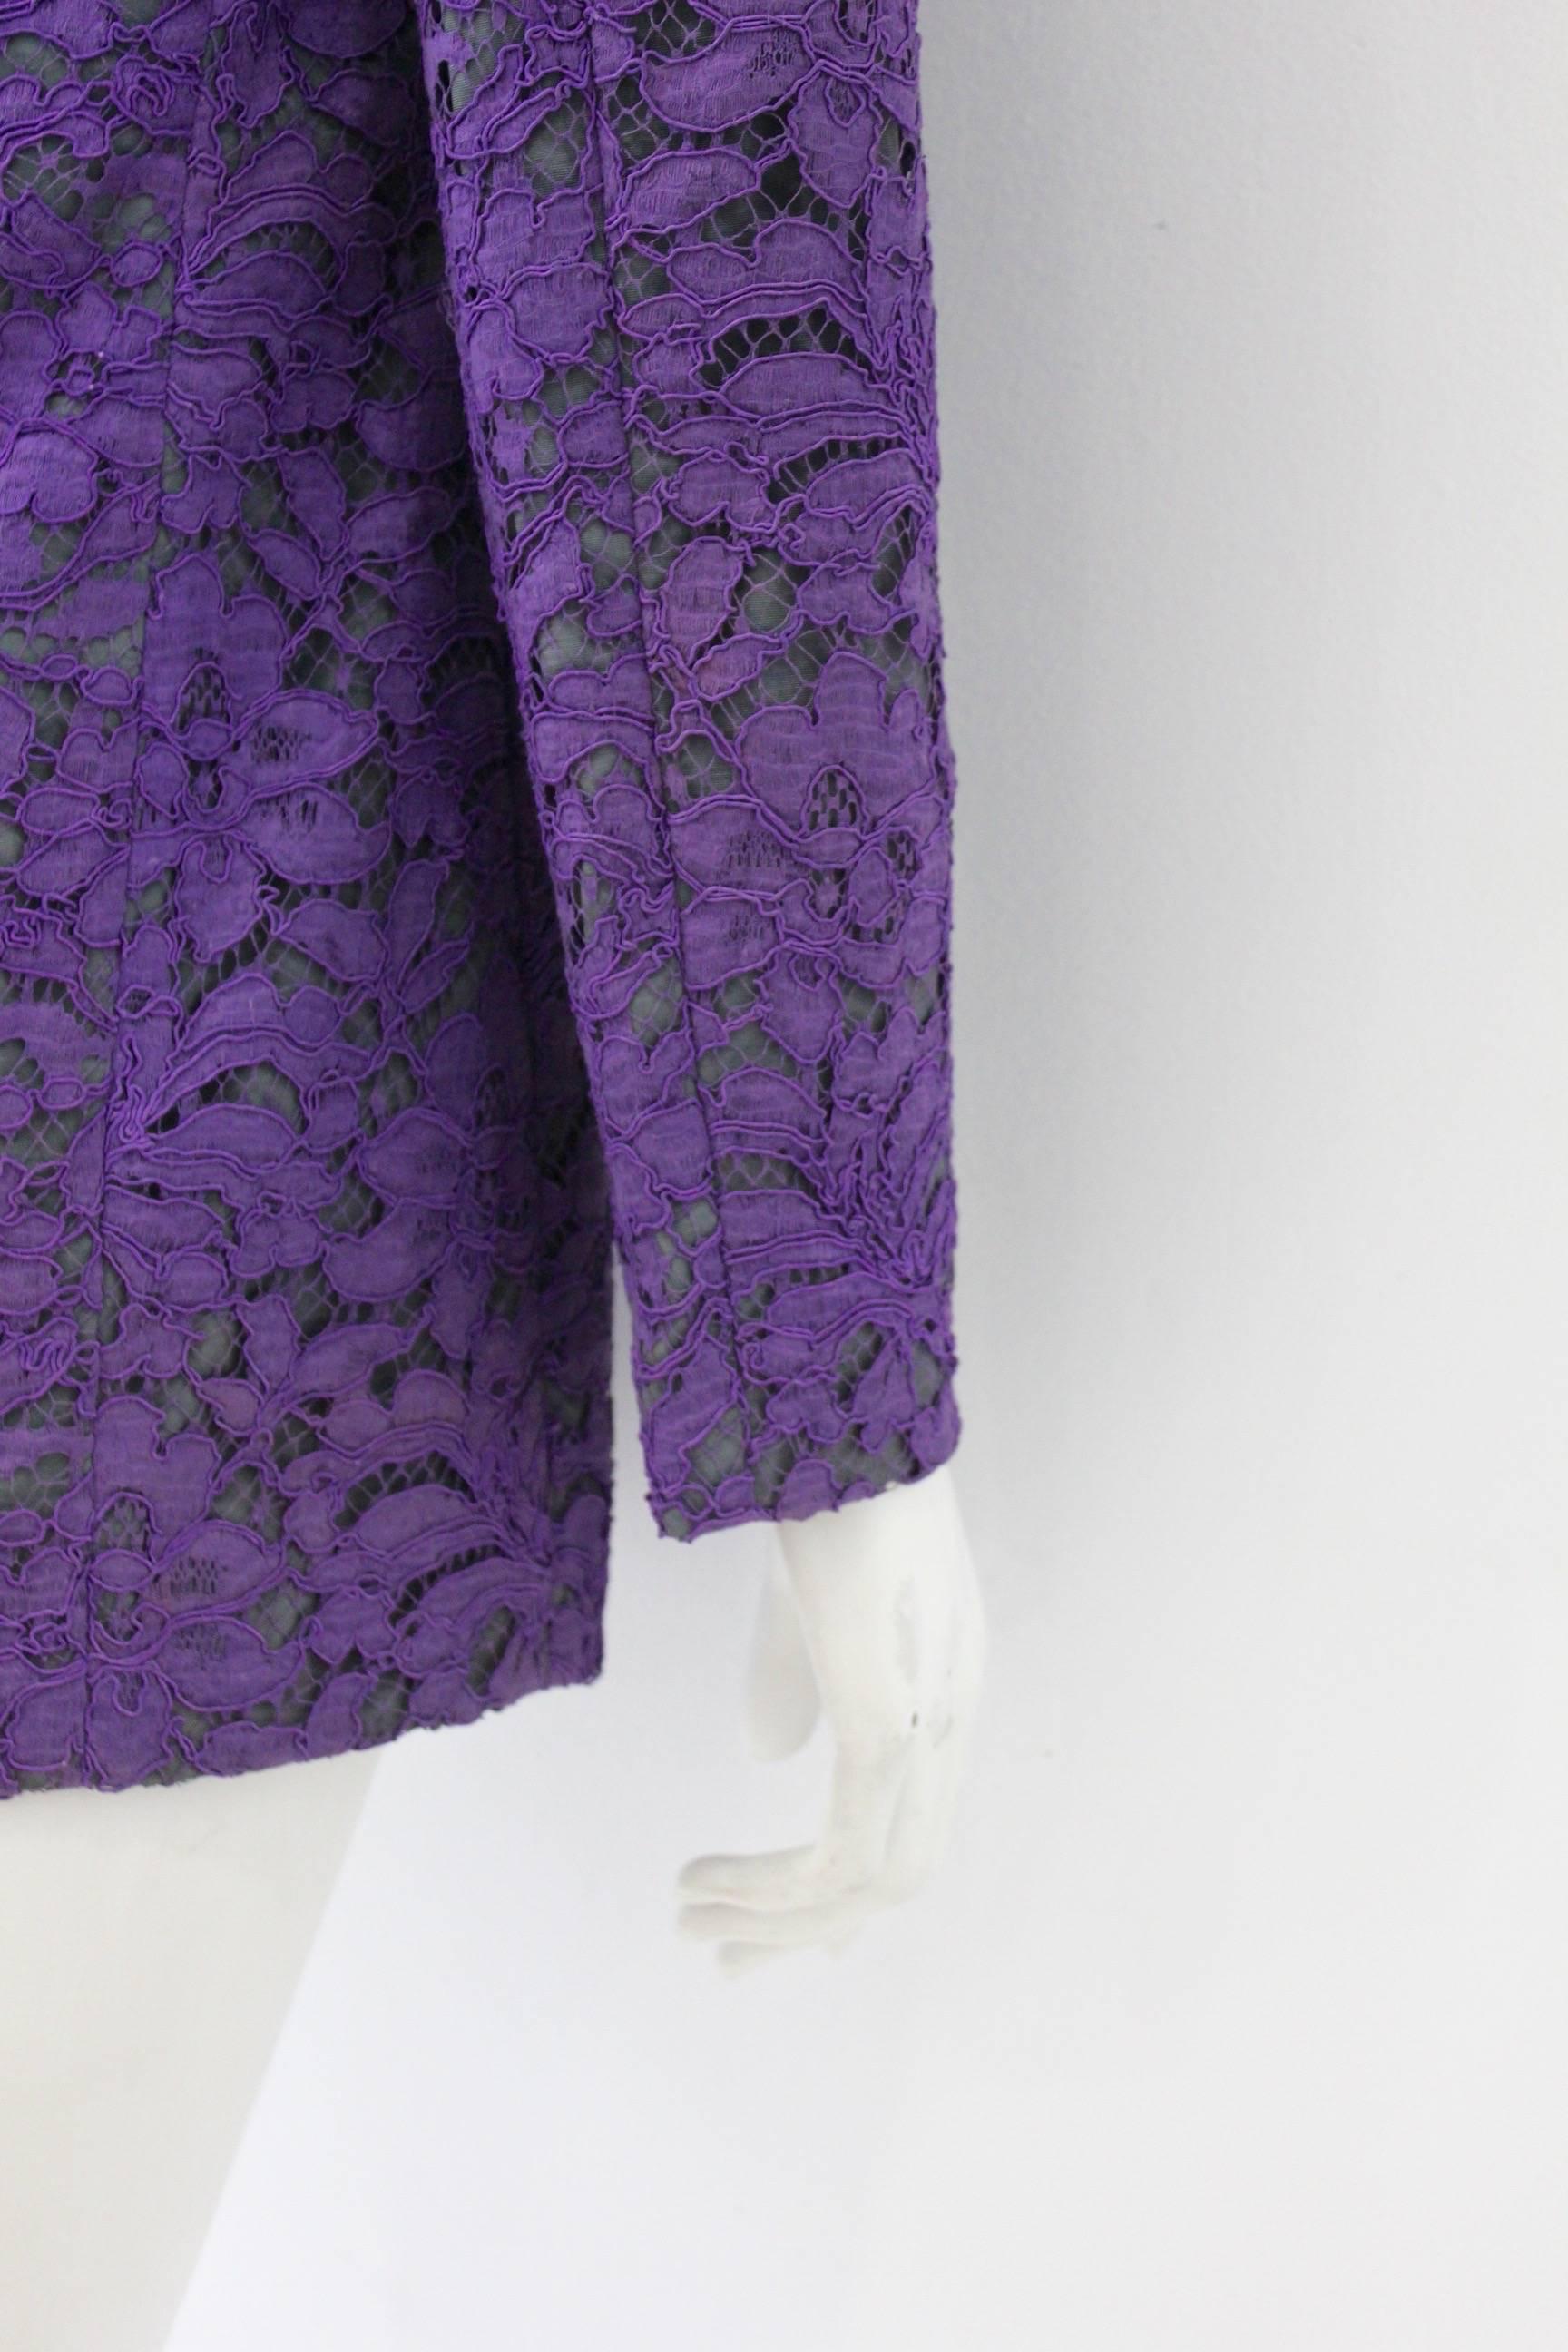 Exquisite Gianfranco Ferre Royal Purple Lace Jacket For Sale 2